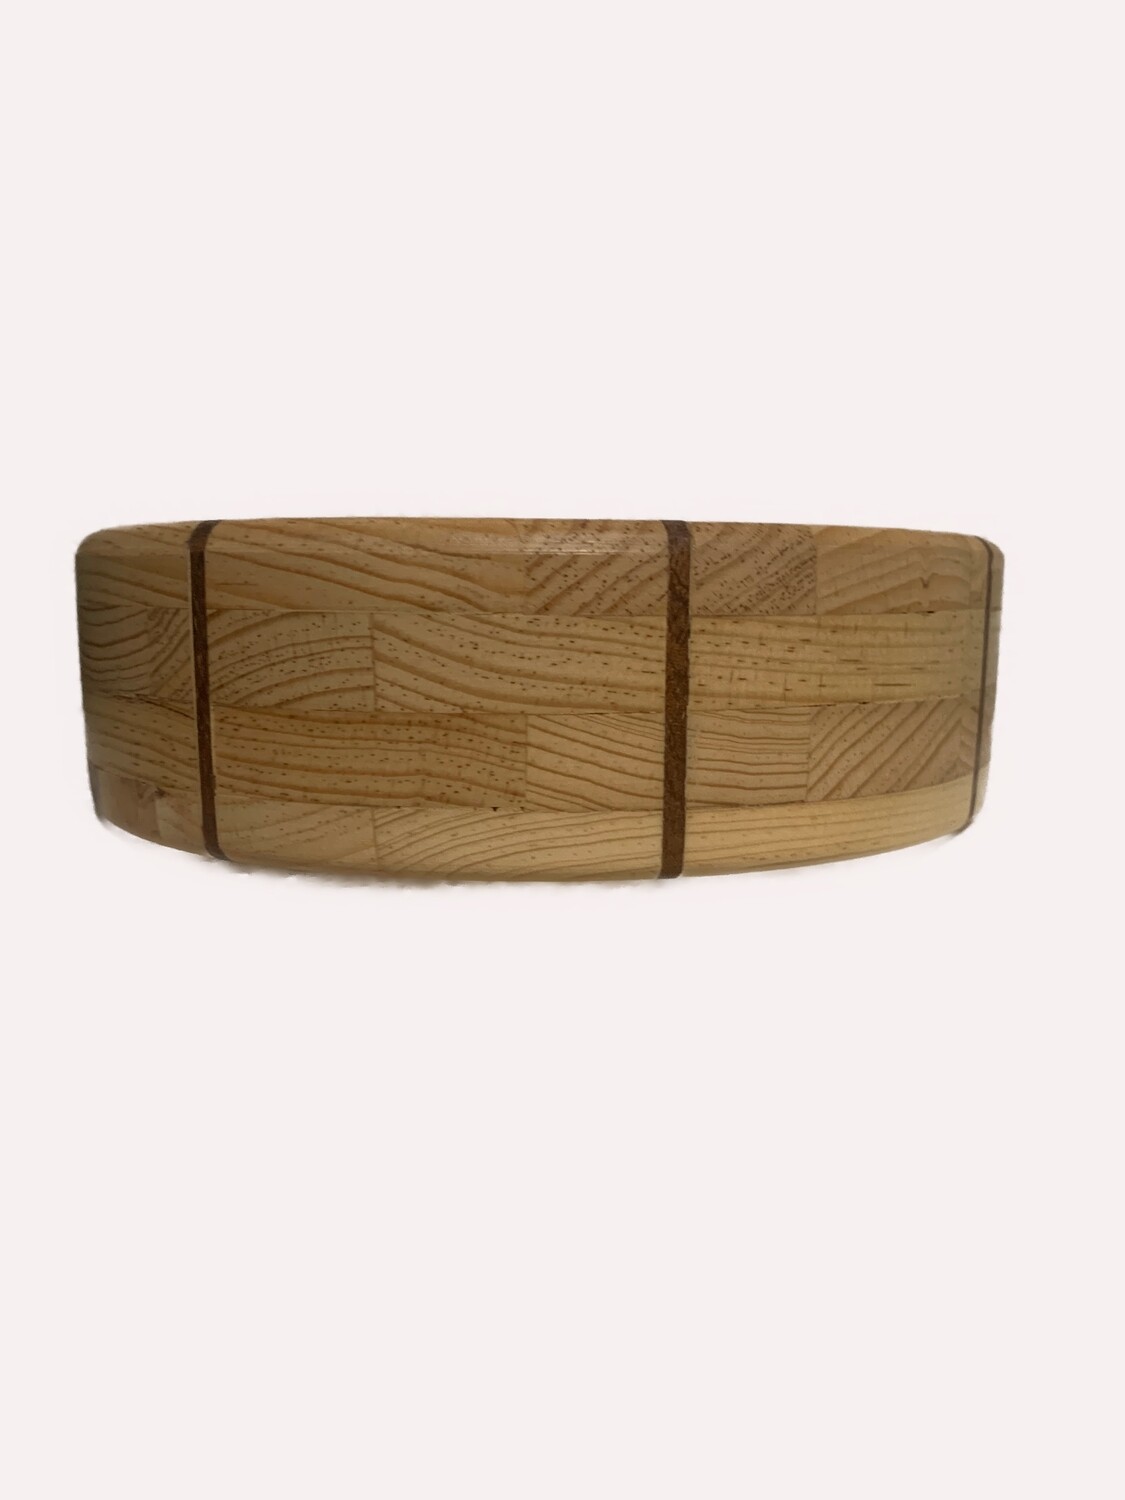 Bowl - Multi Wood